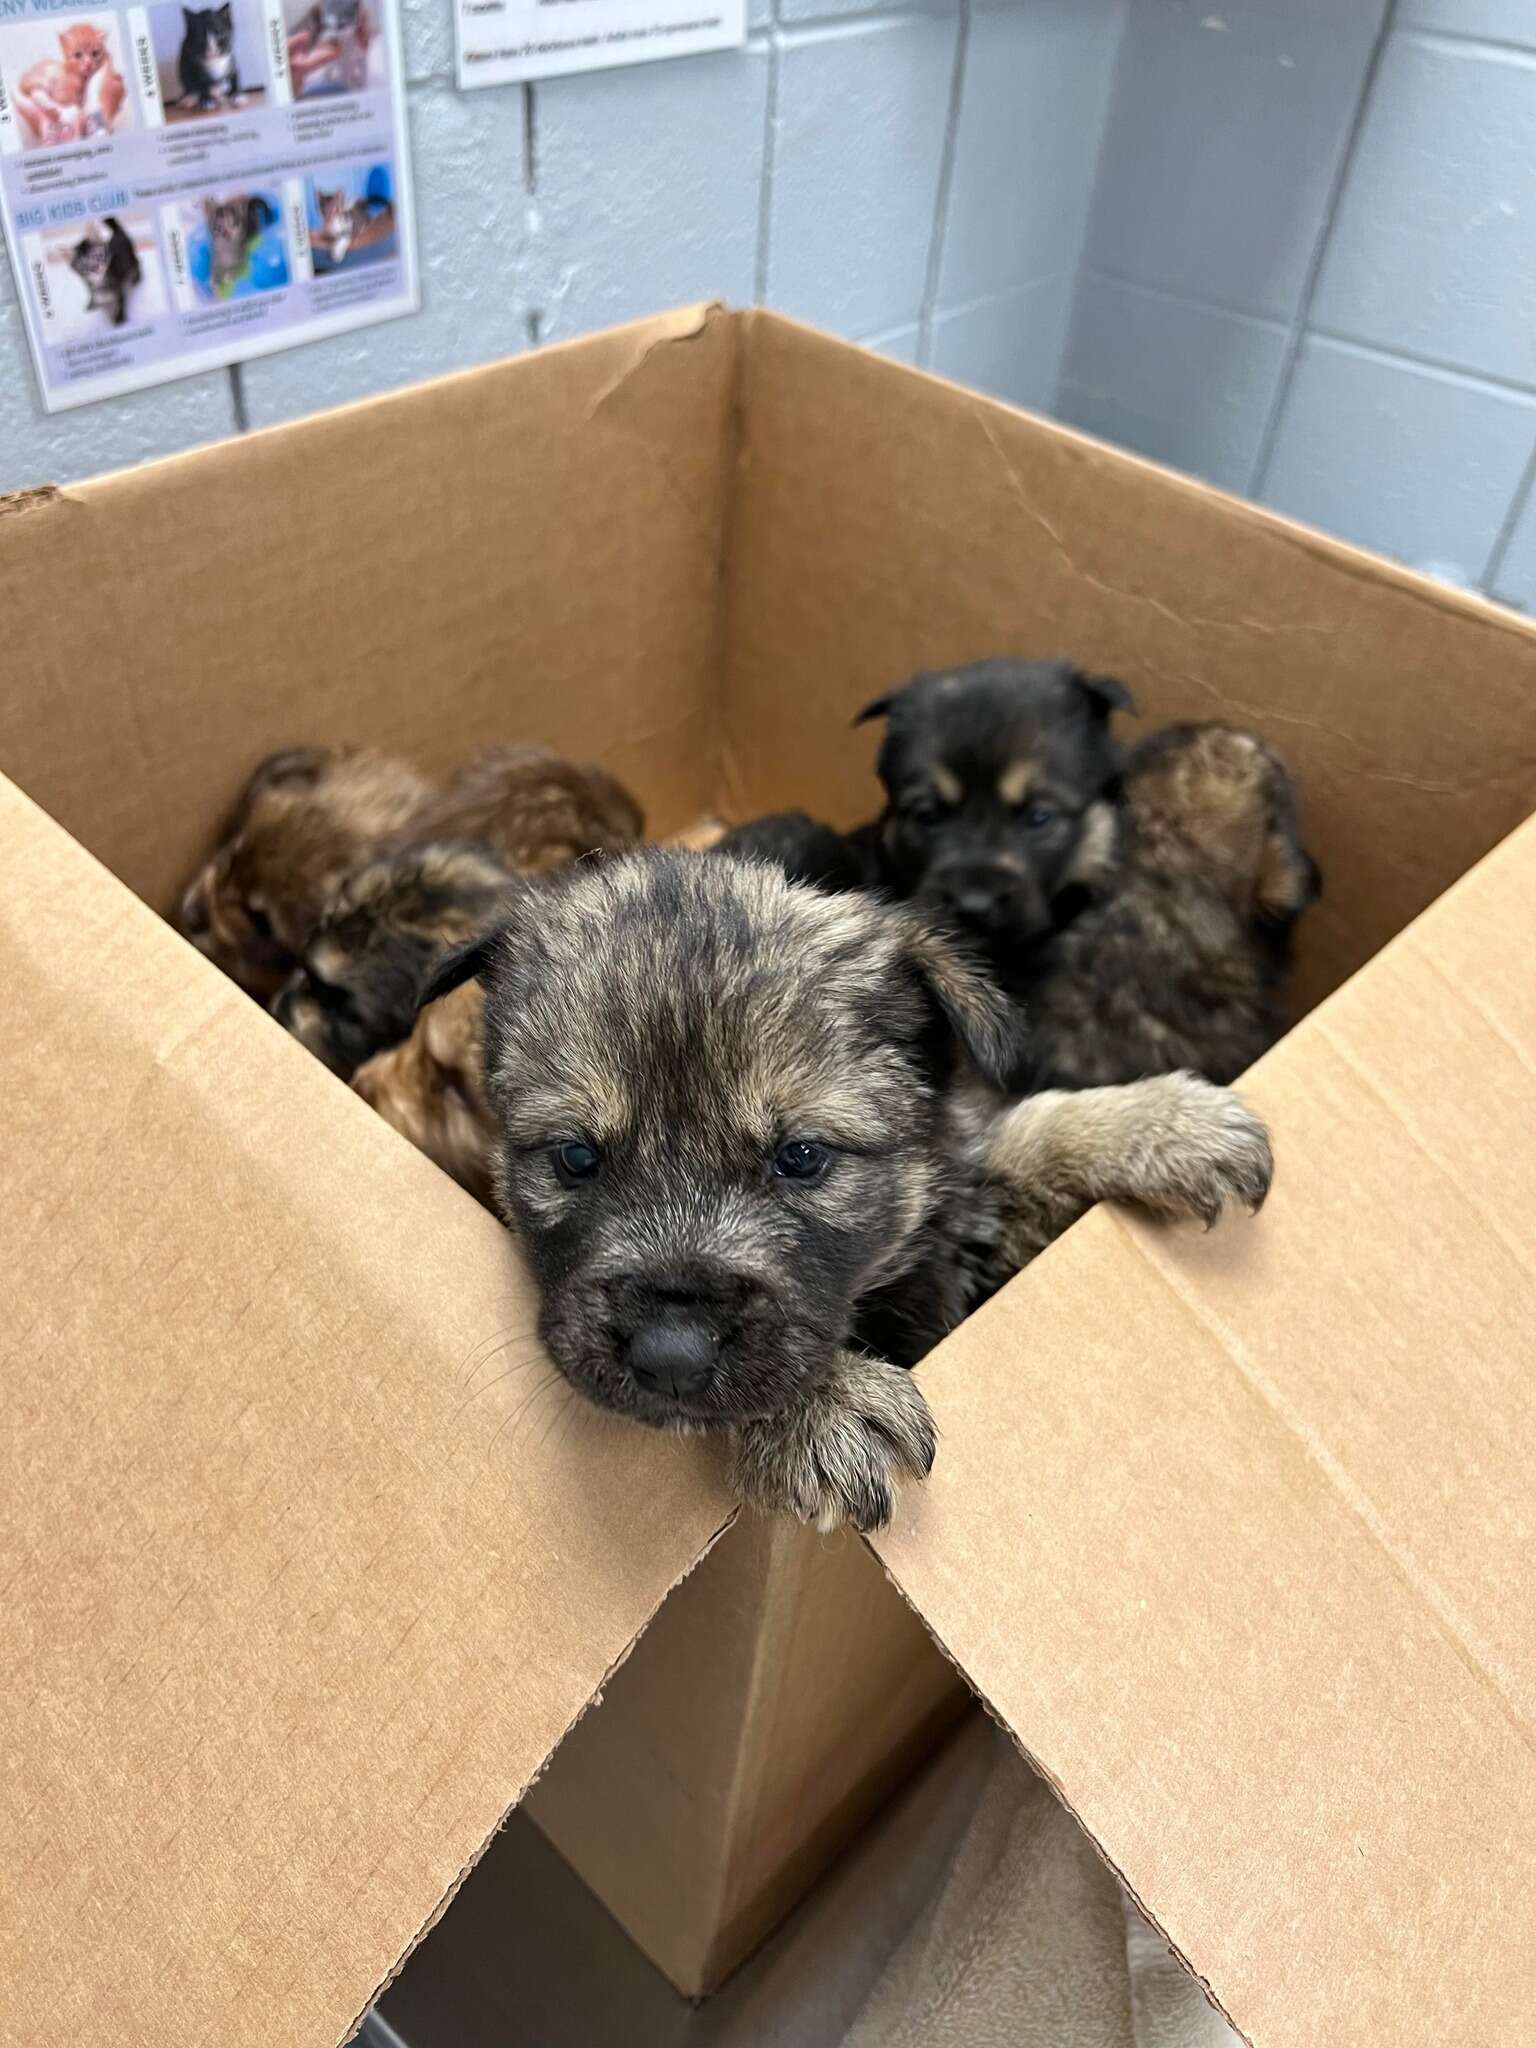 Puppies sit in a cardboard box.